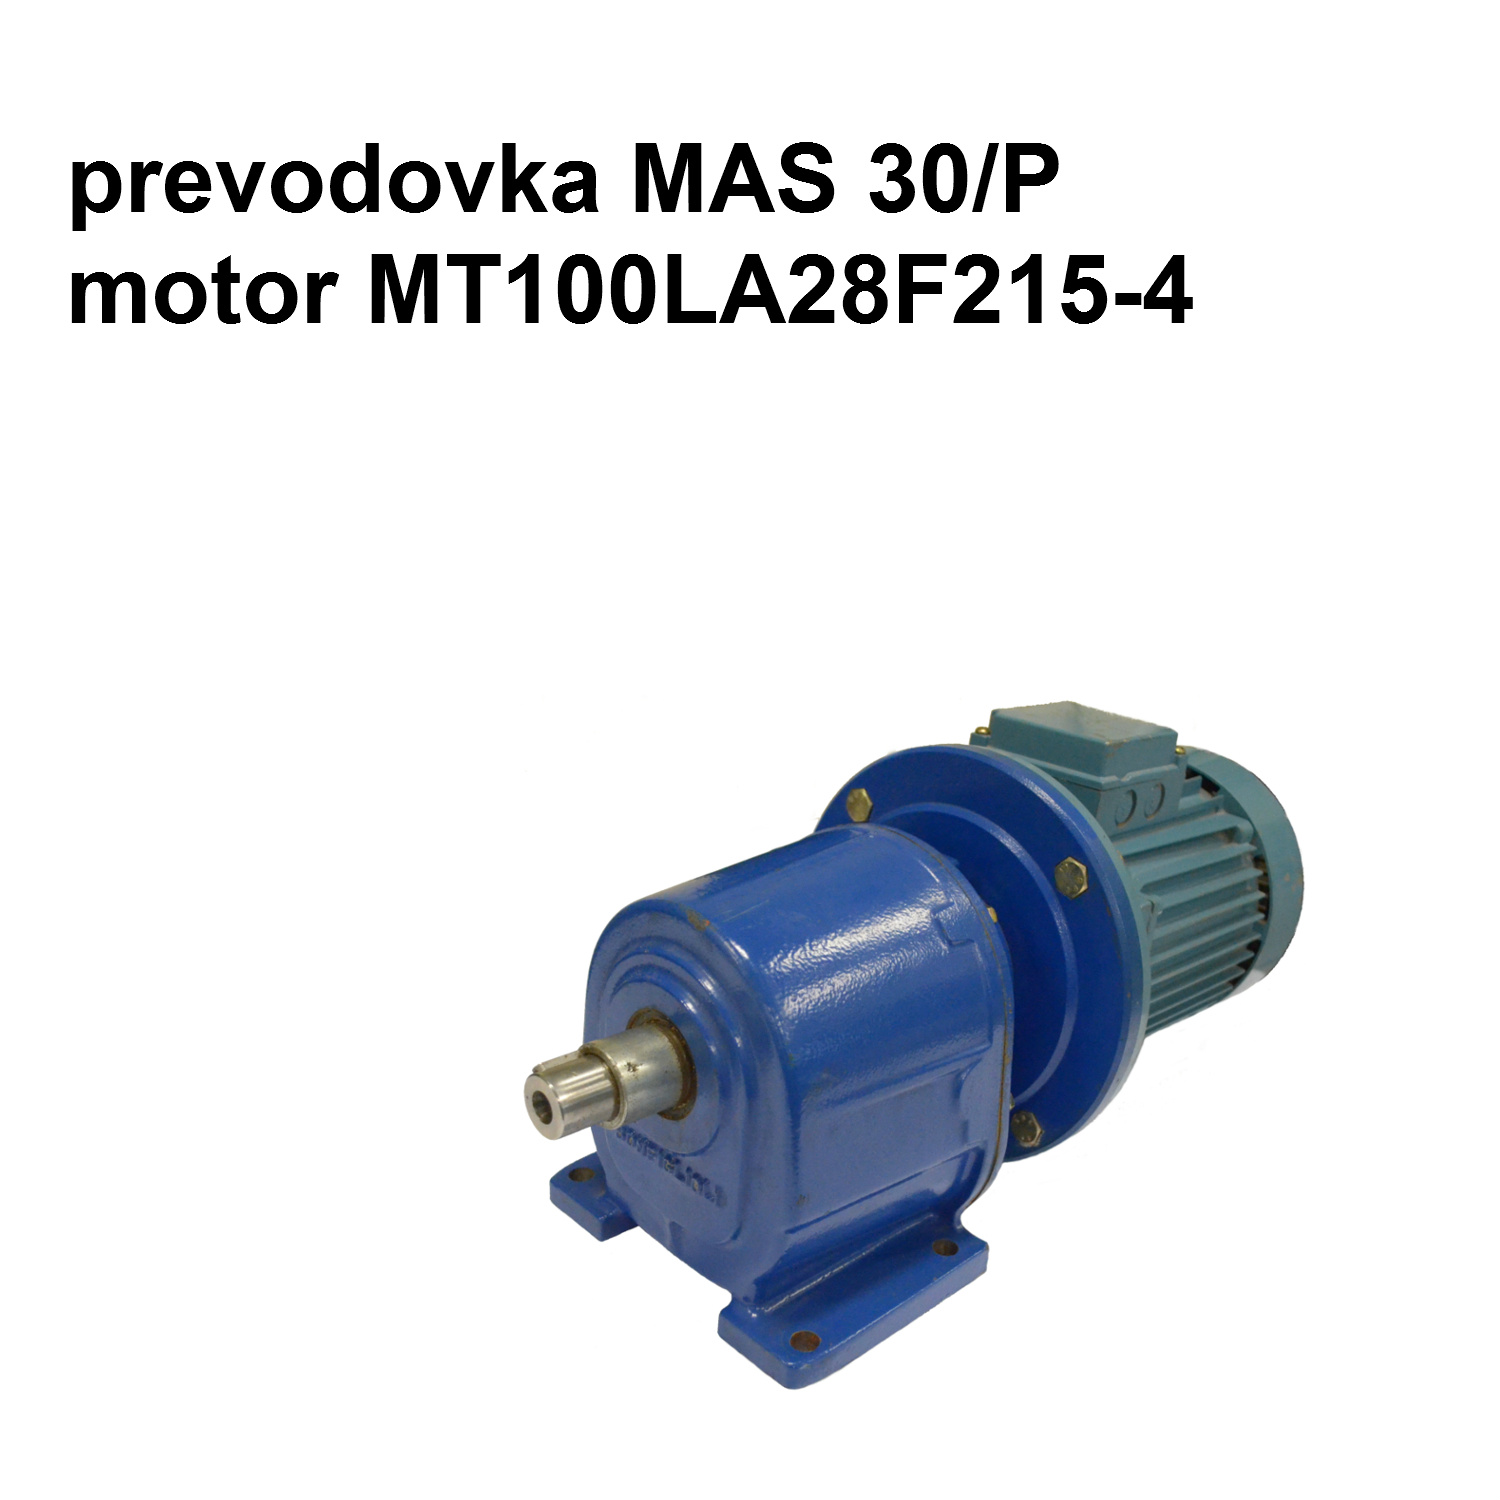 prevodovka MAS 30/P, P1 2,2/2,5 kW, n1 1430/1720/min, i 12,62 motor  MT100LA28F215-4